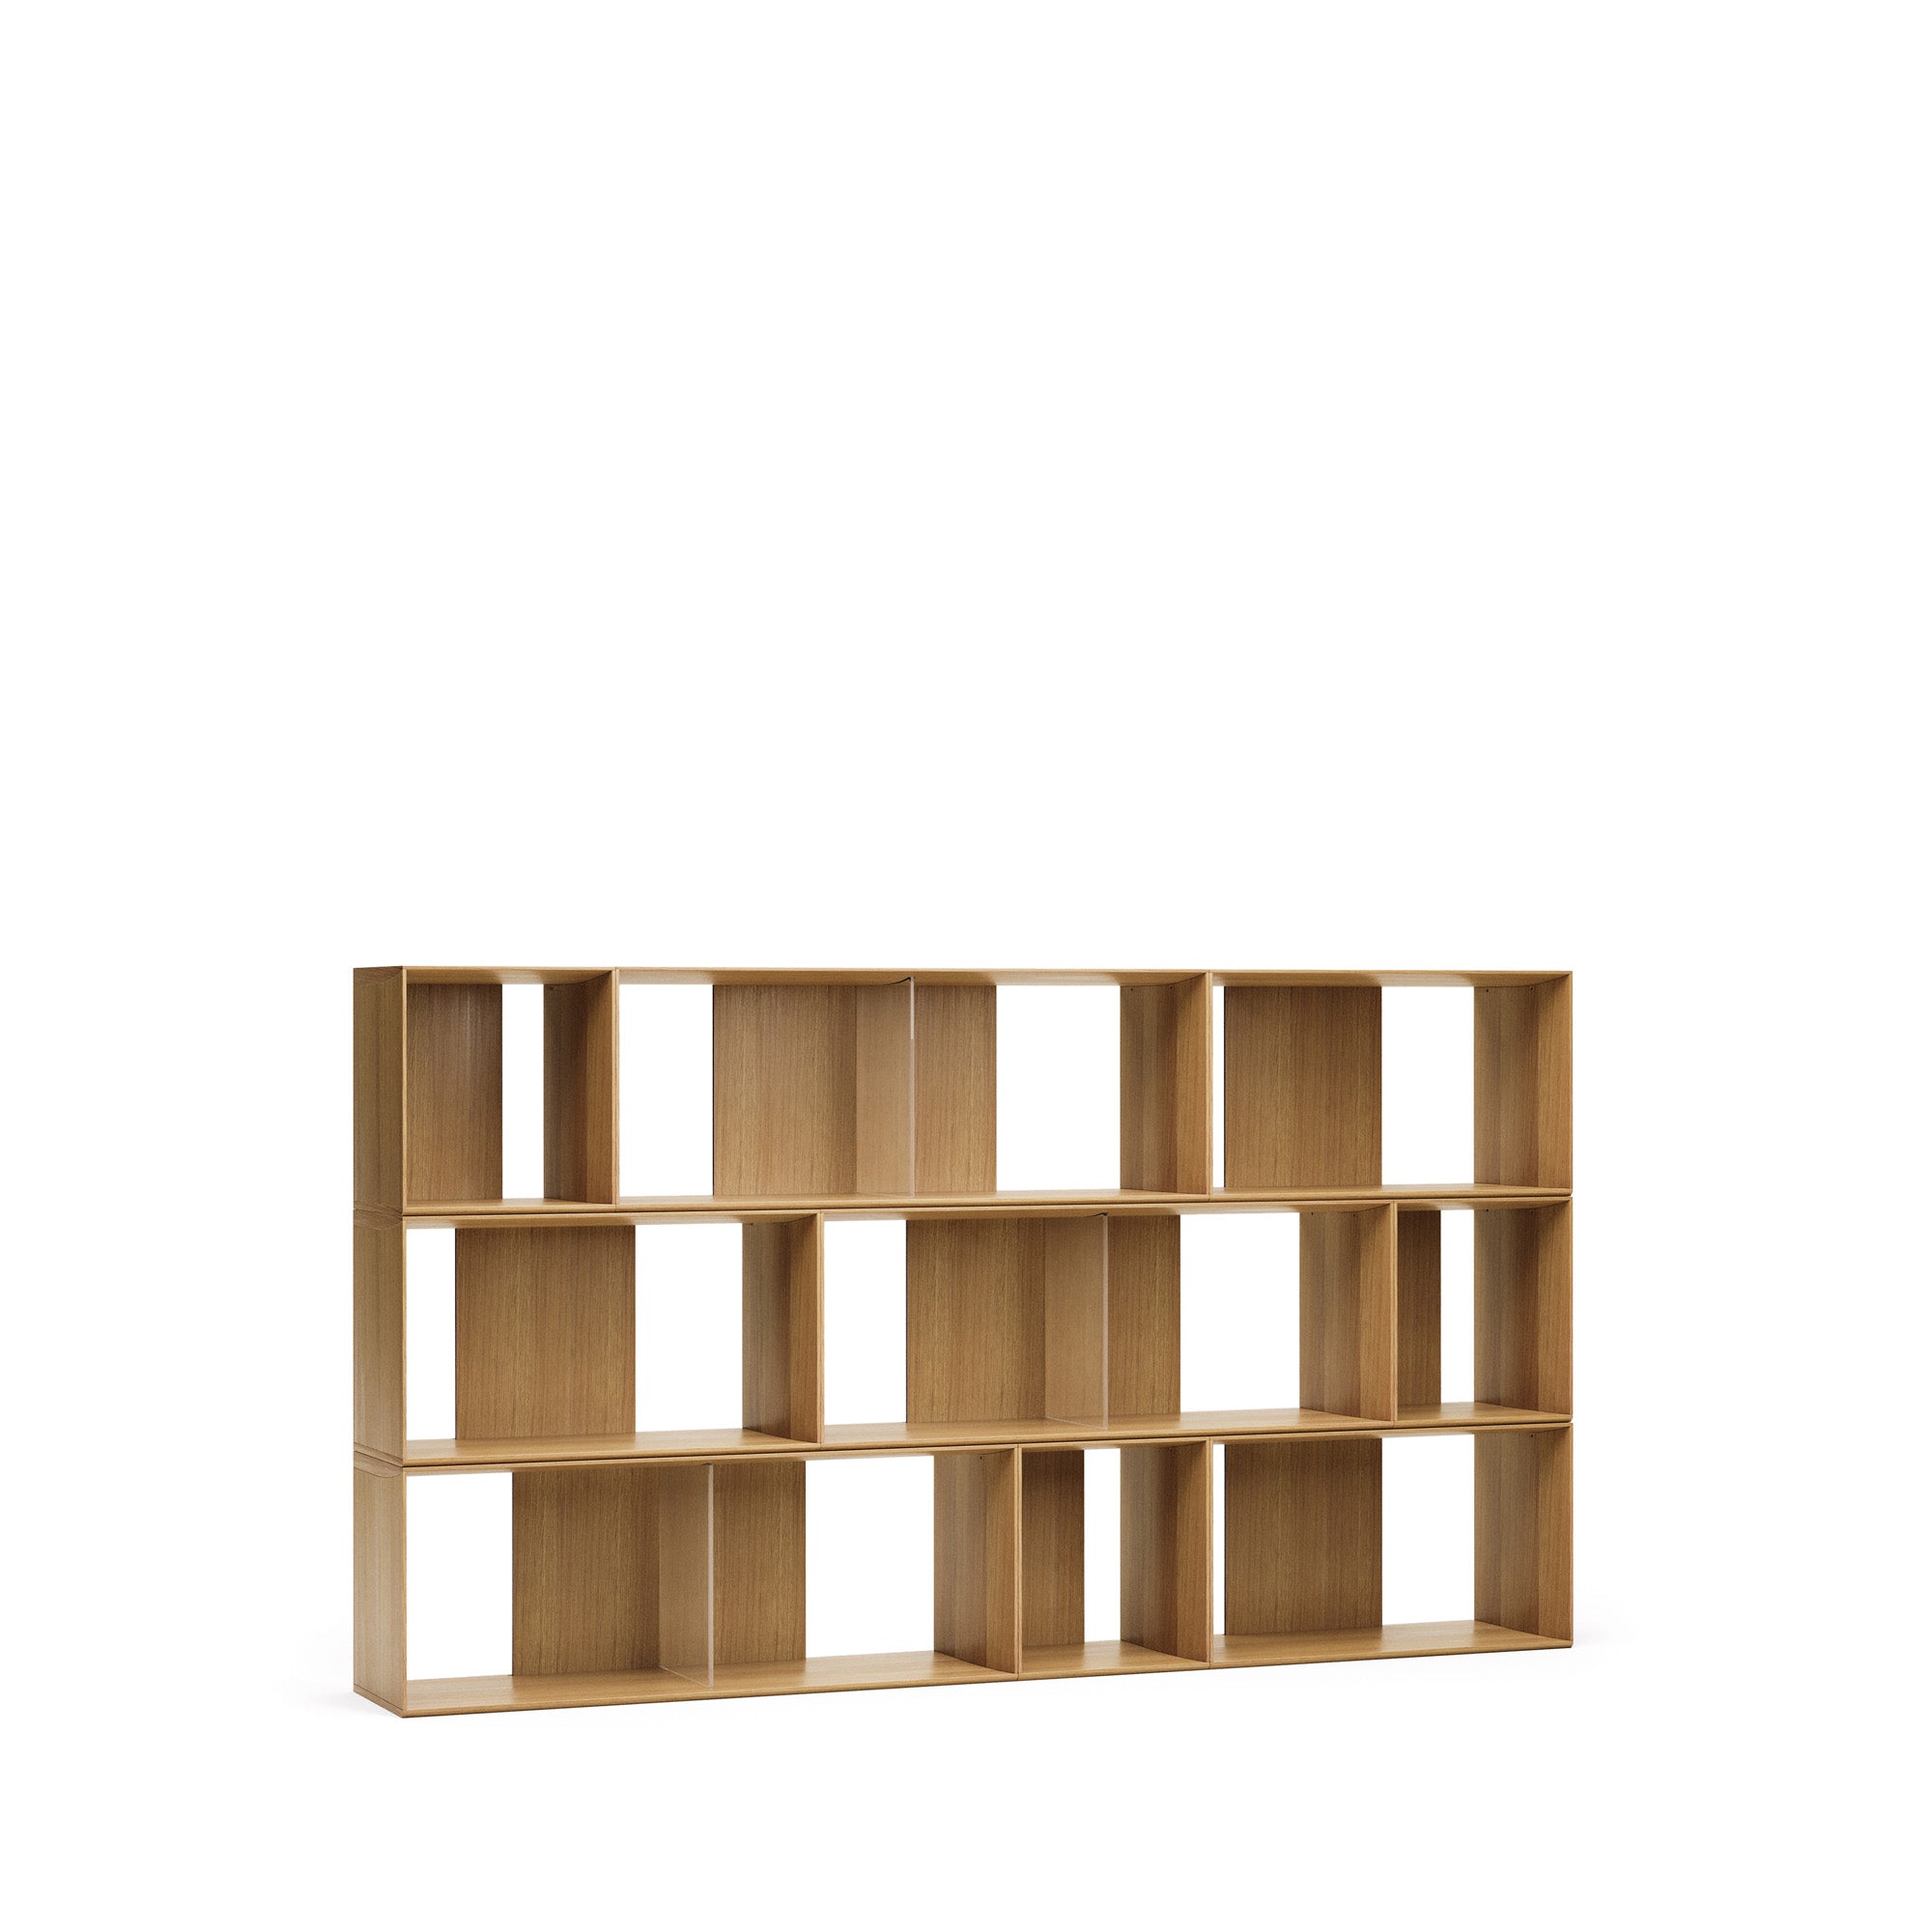 Litto set of 9 modular shelving units in oak wood veneer, 202 x 114 cm